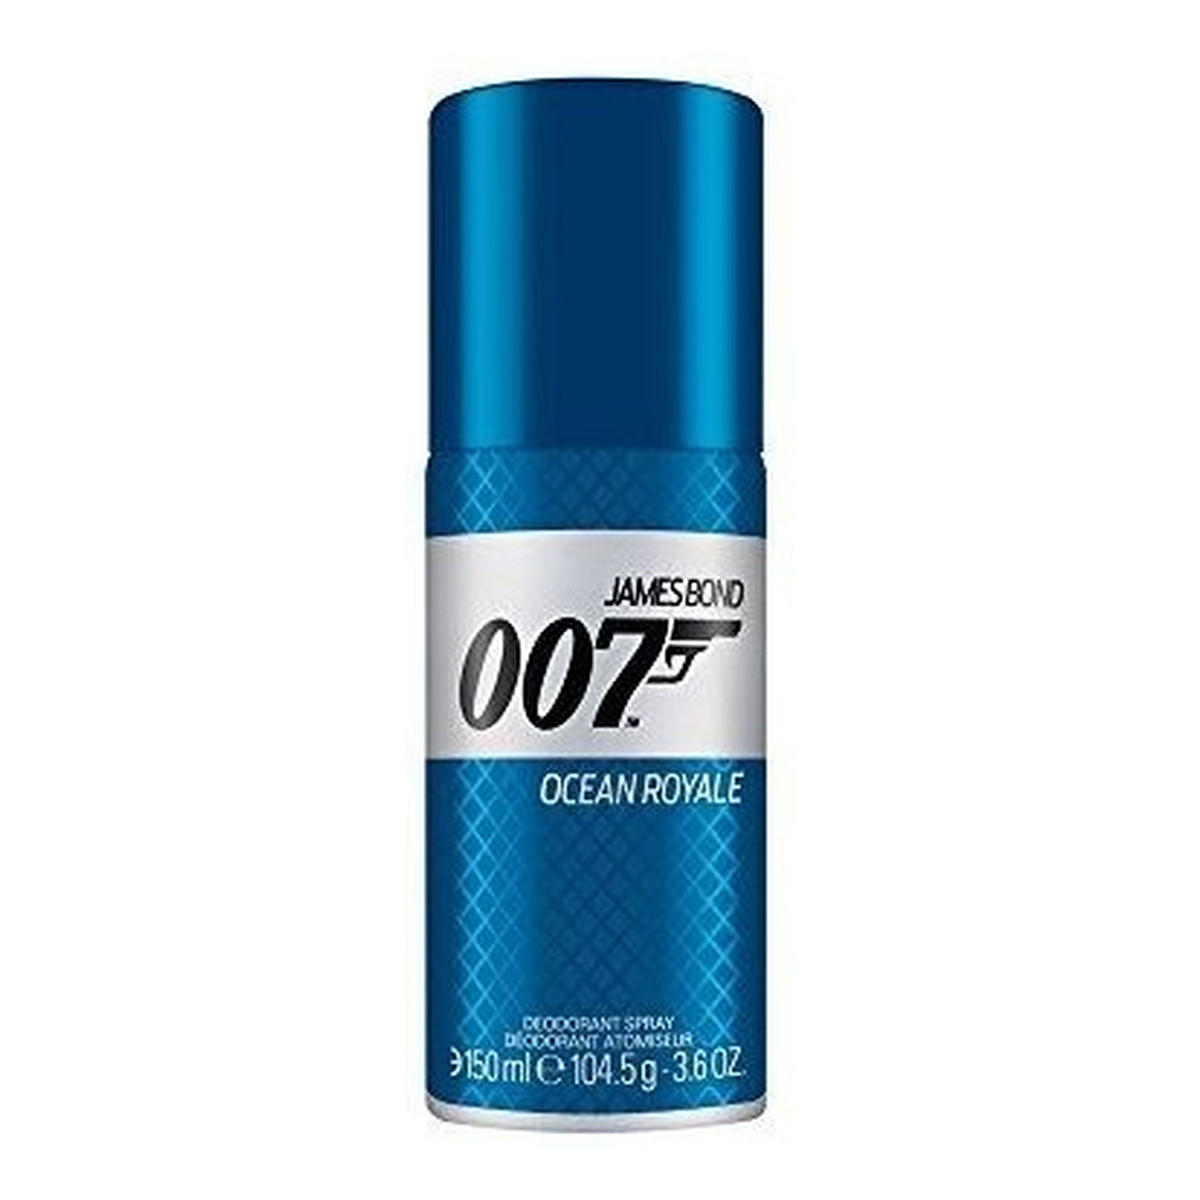 James Bond 007 007 Ocean Royale Dezodorant spray 150ml